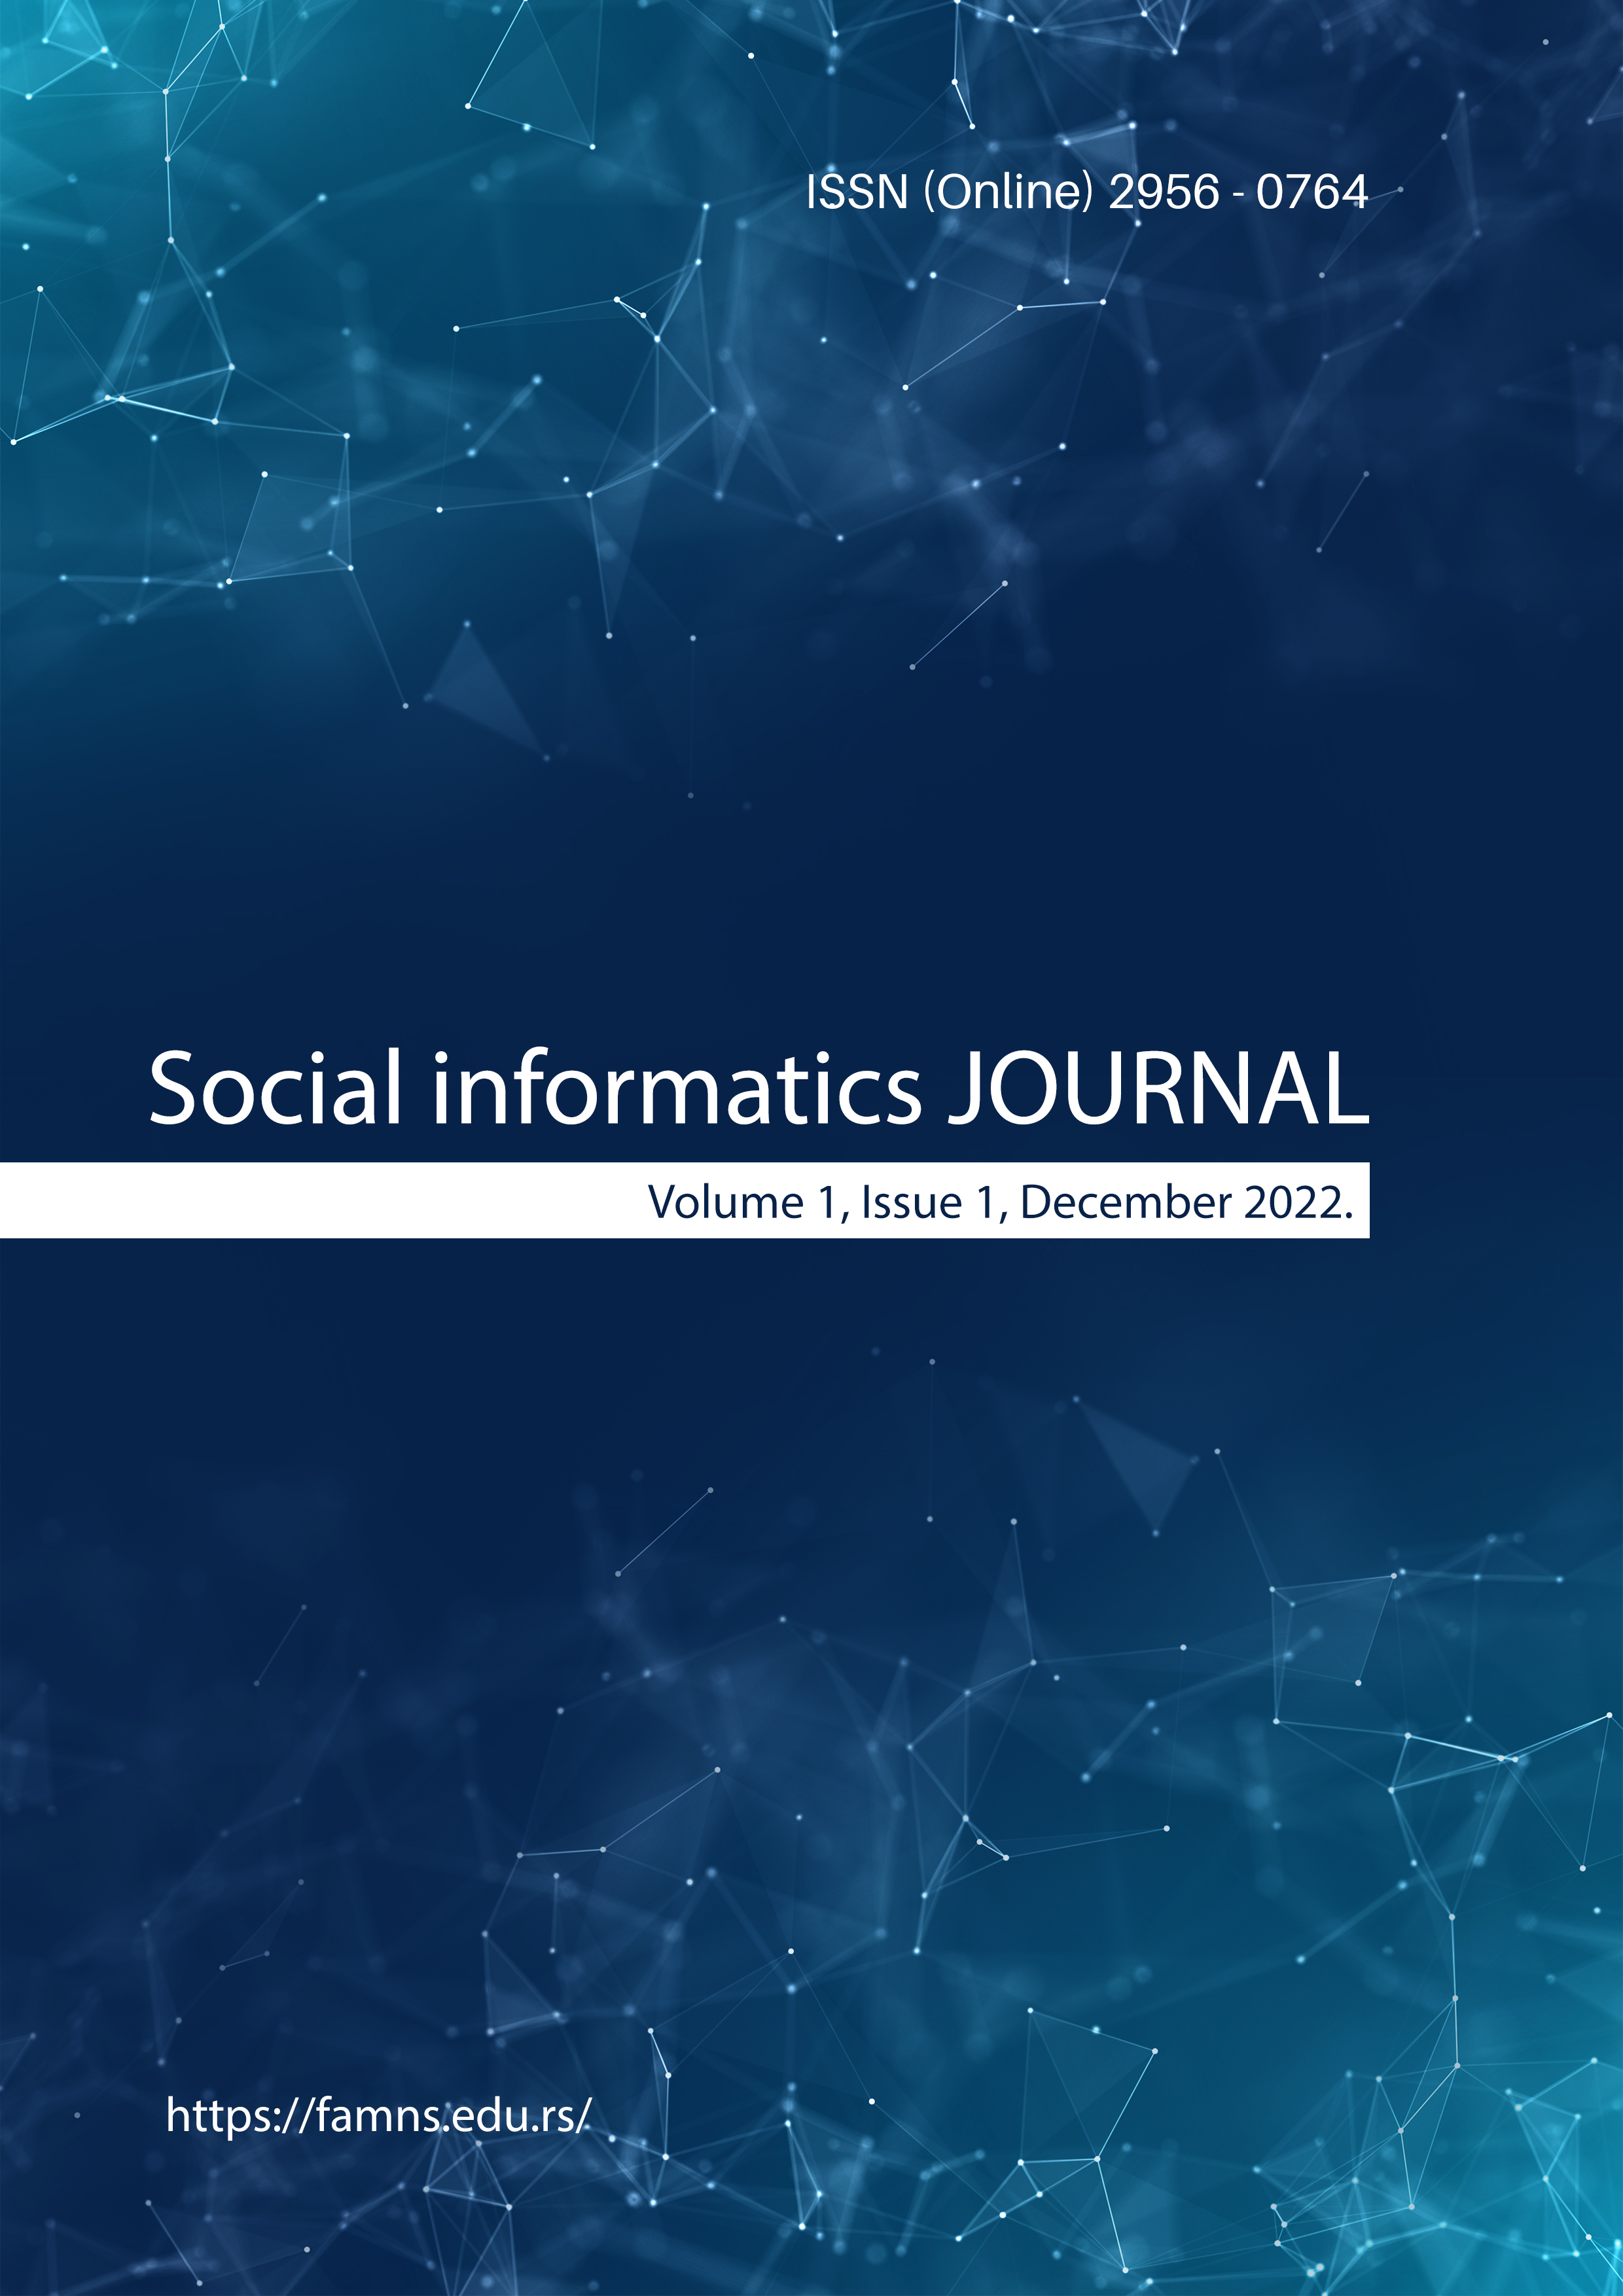 Social informatics journal